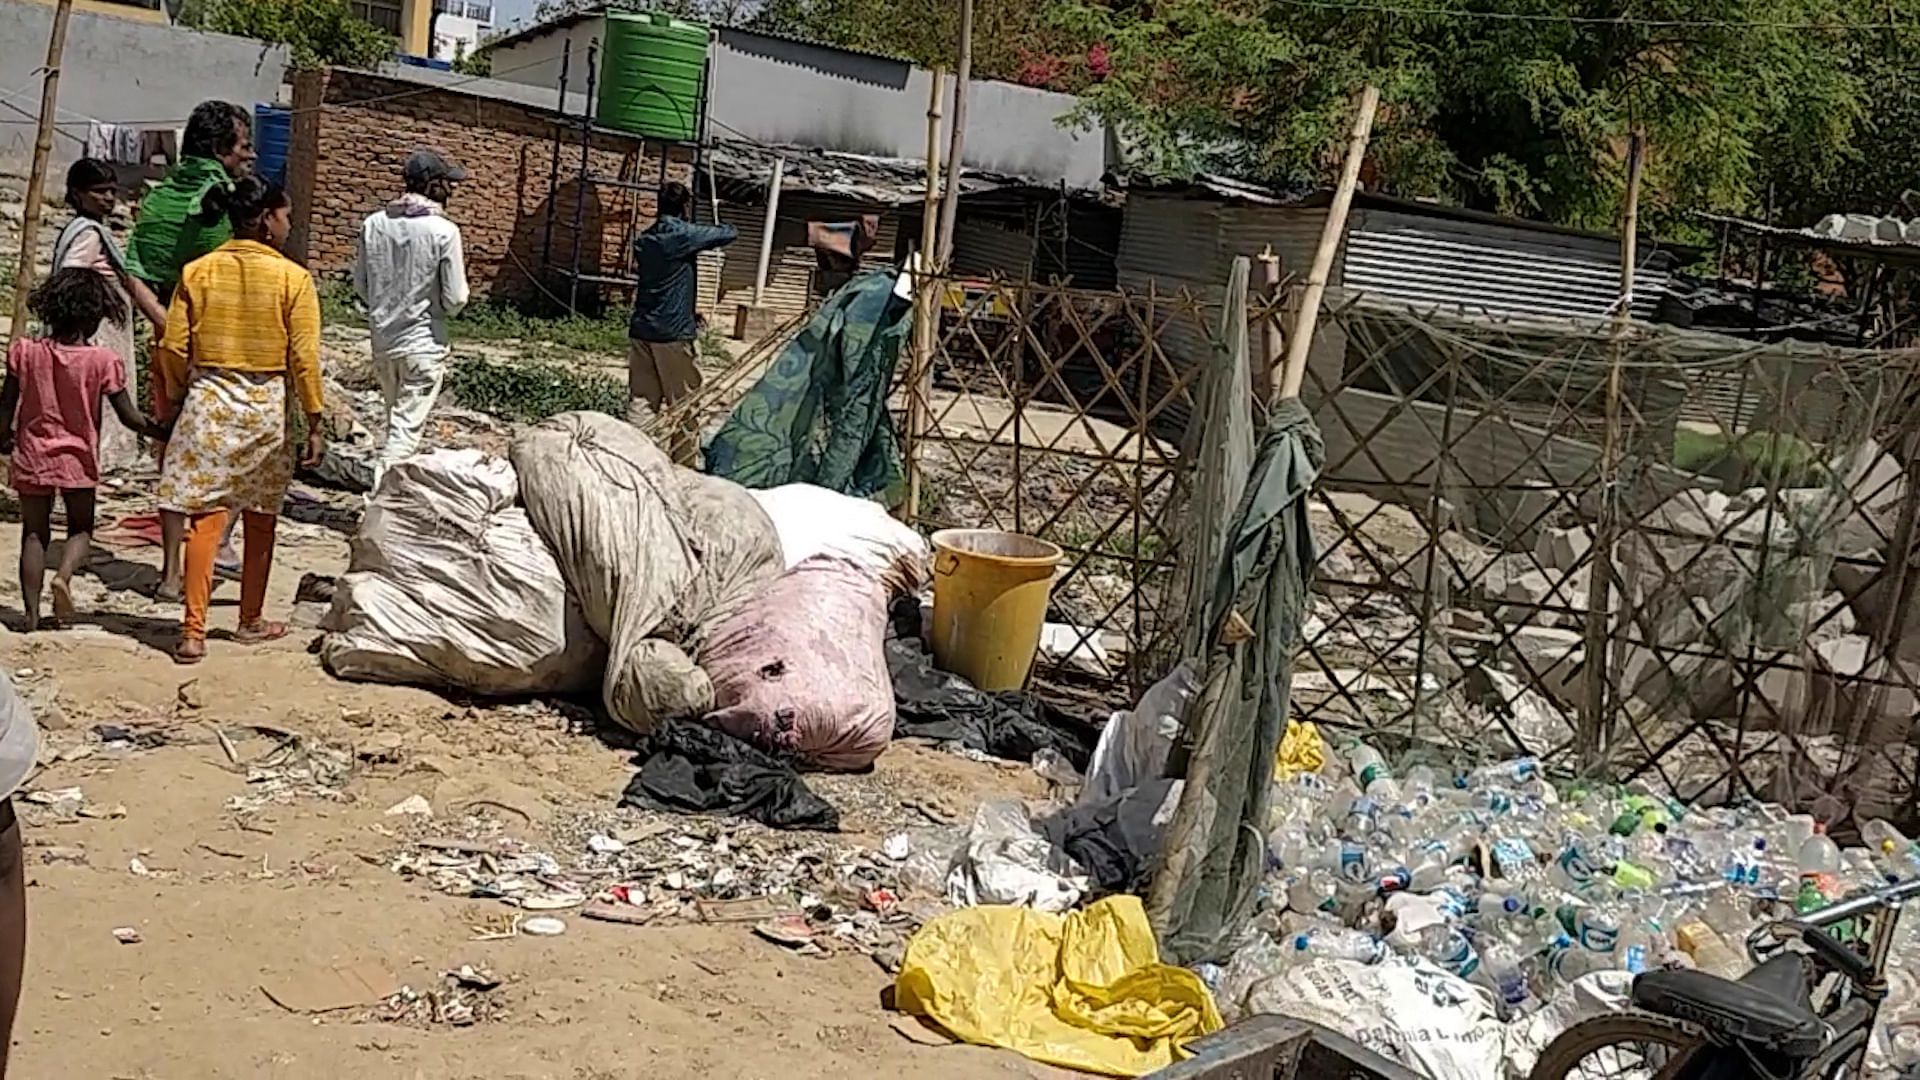 Trash has accumulated at the slum since the lockdown began | ThePrint